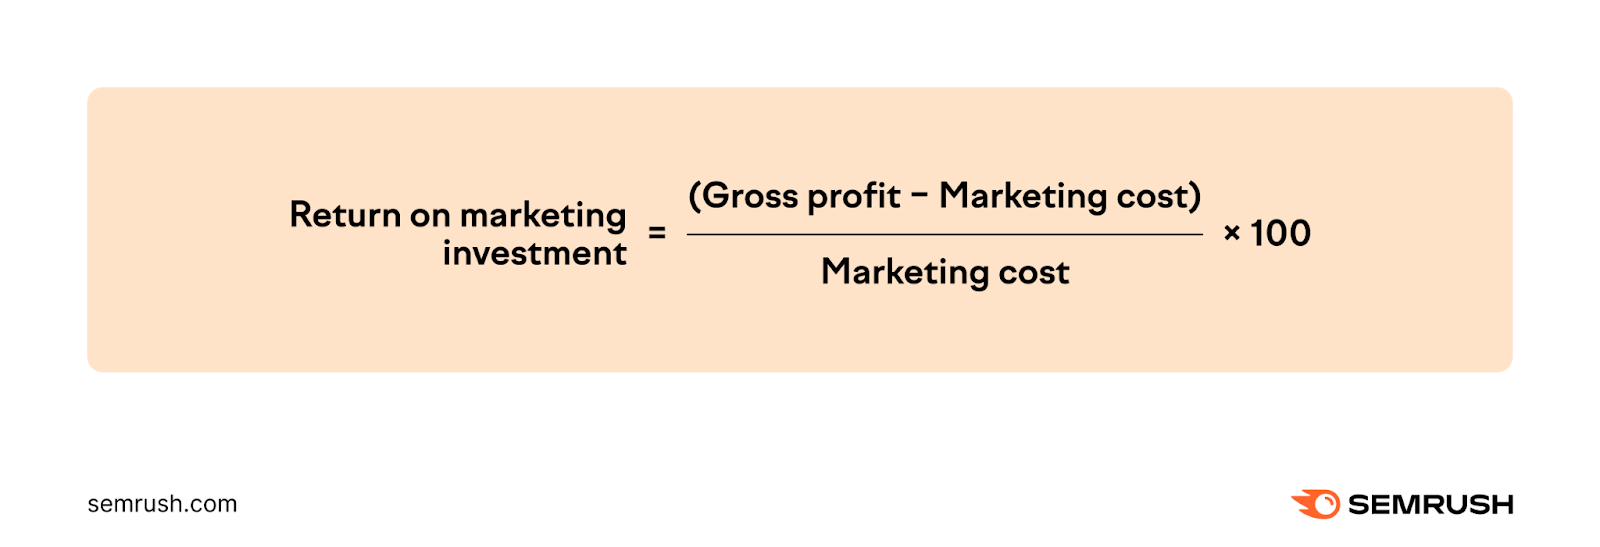 Return on marketing investment (ROMI) formula